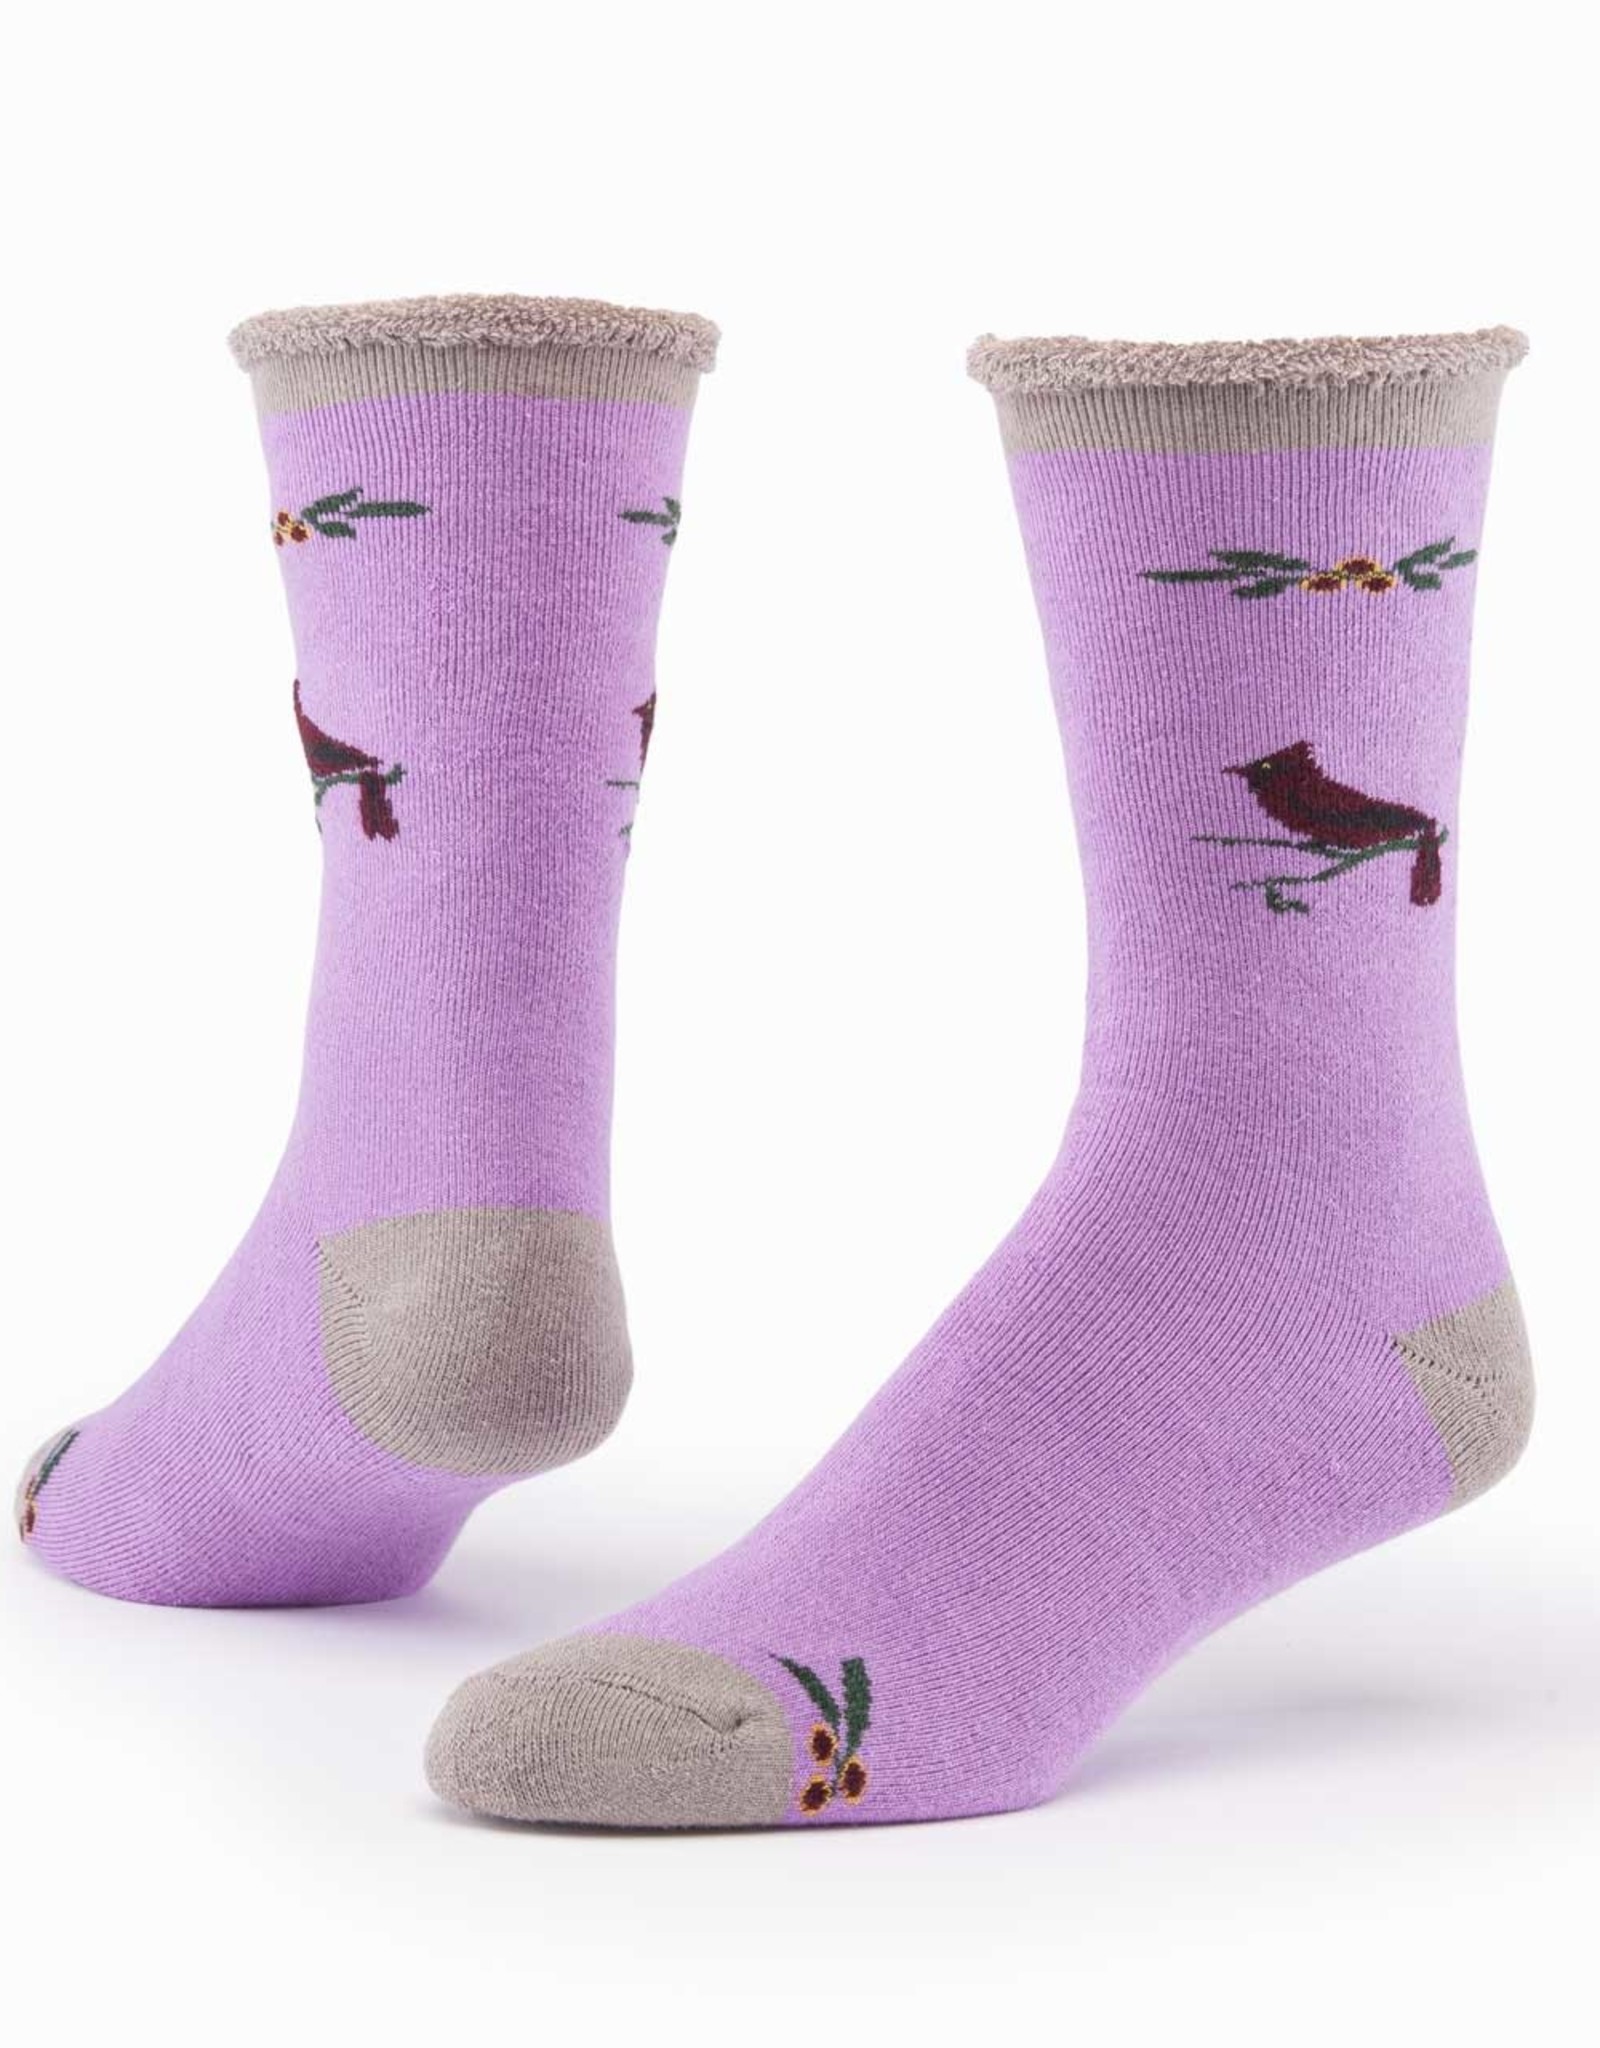 Maggie's Organics Wool Snuggle Socks (Cardinal Rose)